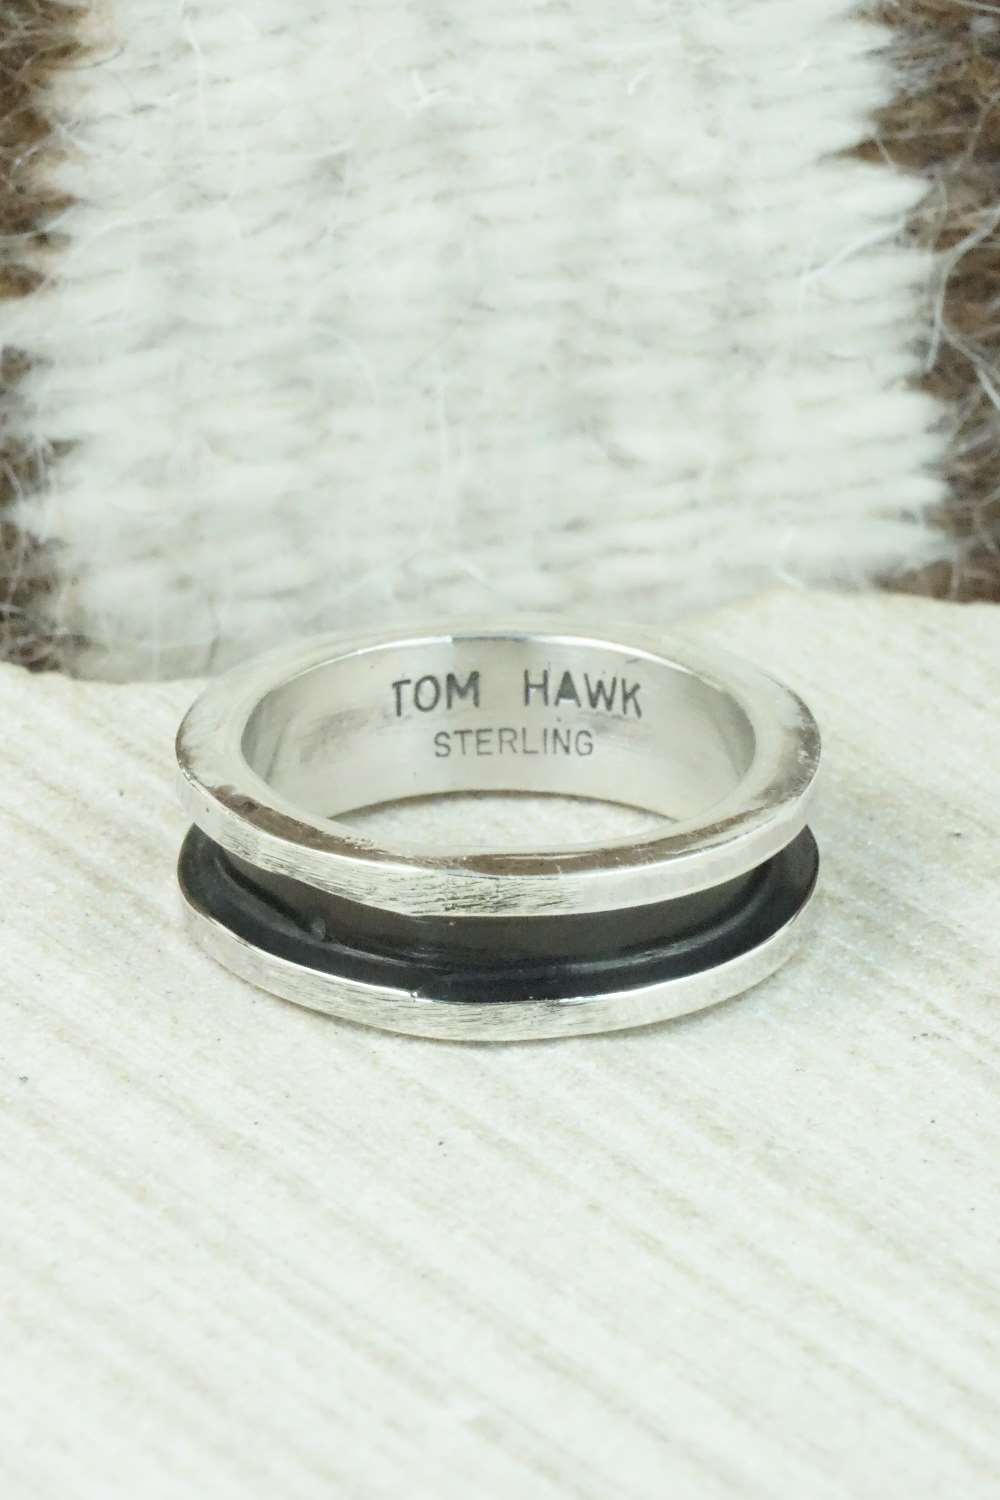 Sterling Silver Ring - Tom Hawk - Size 9.5